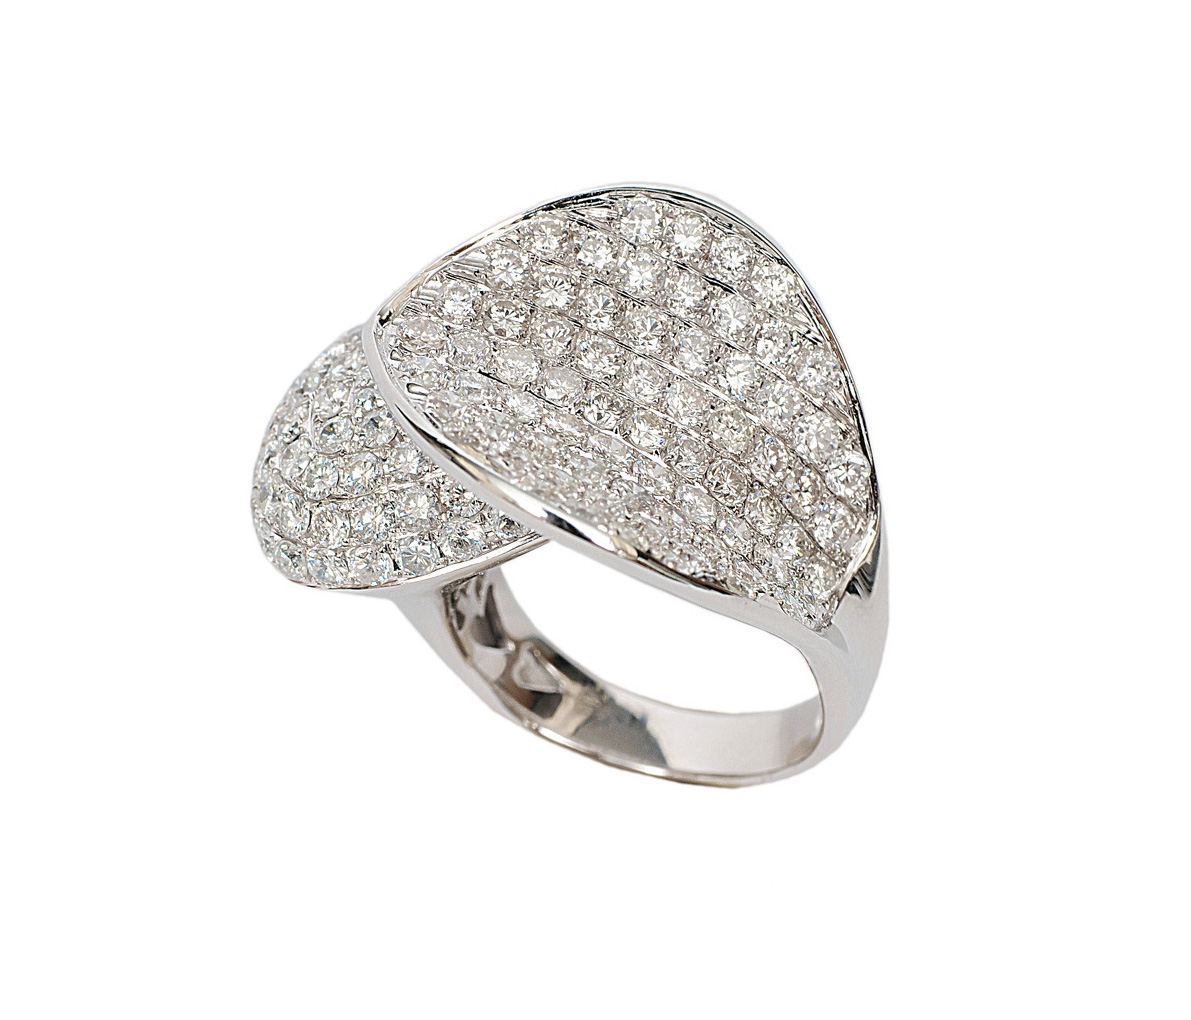 A modern diamond ring